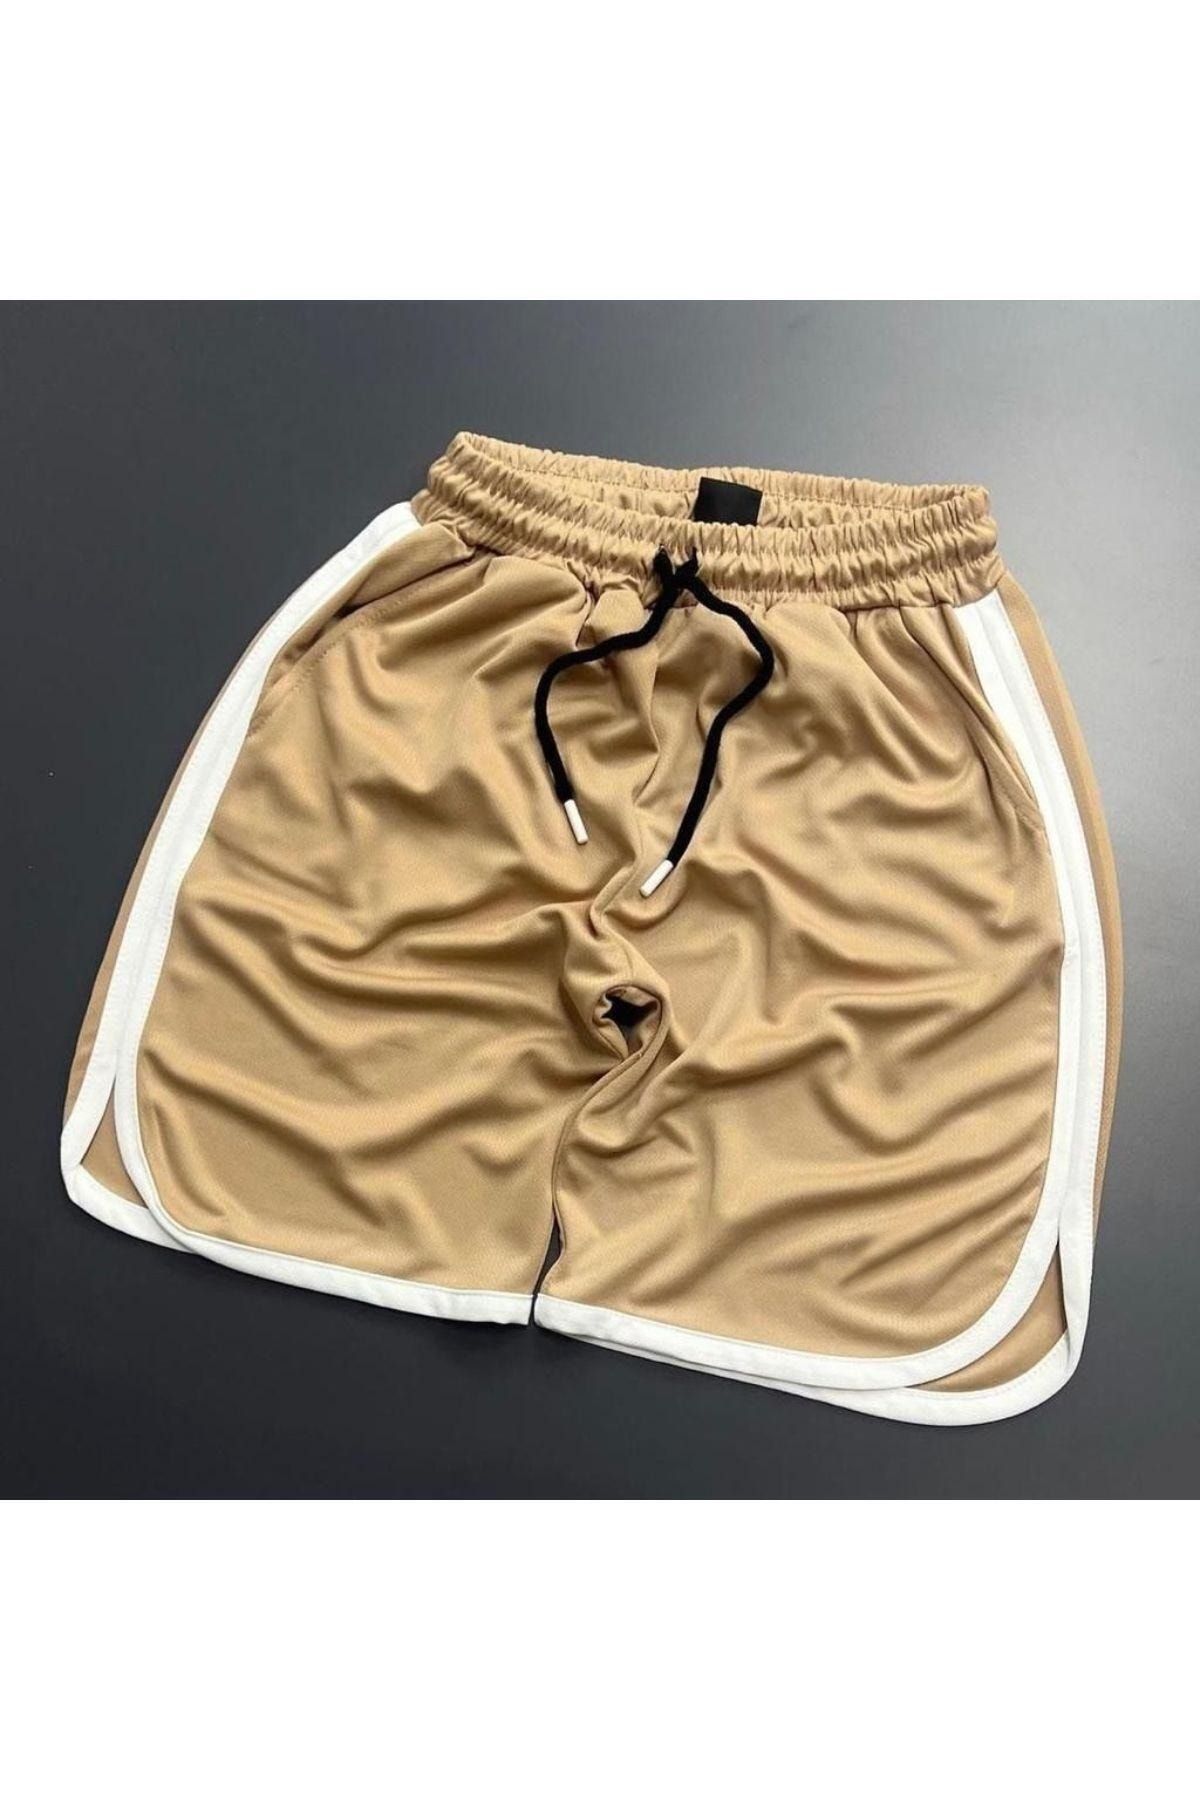 Mesh/Honeycomb Shorts